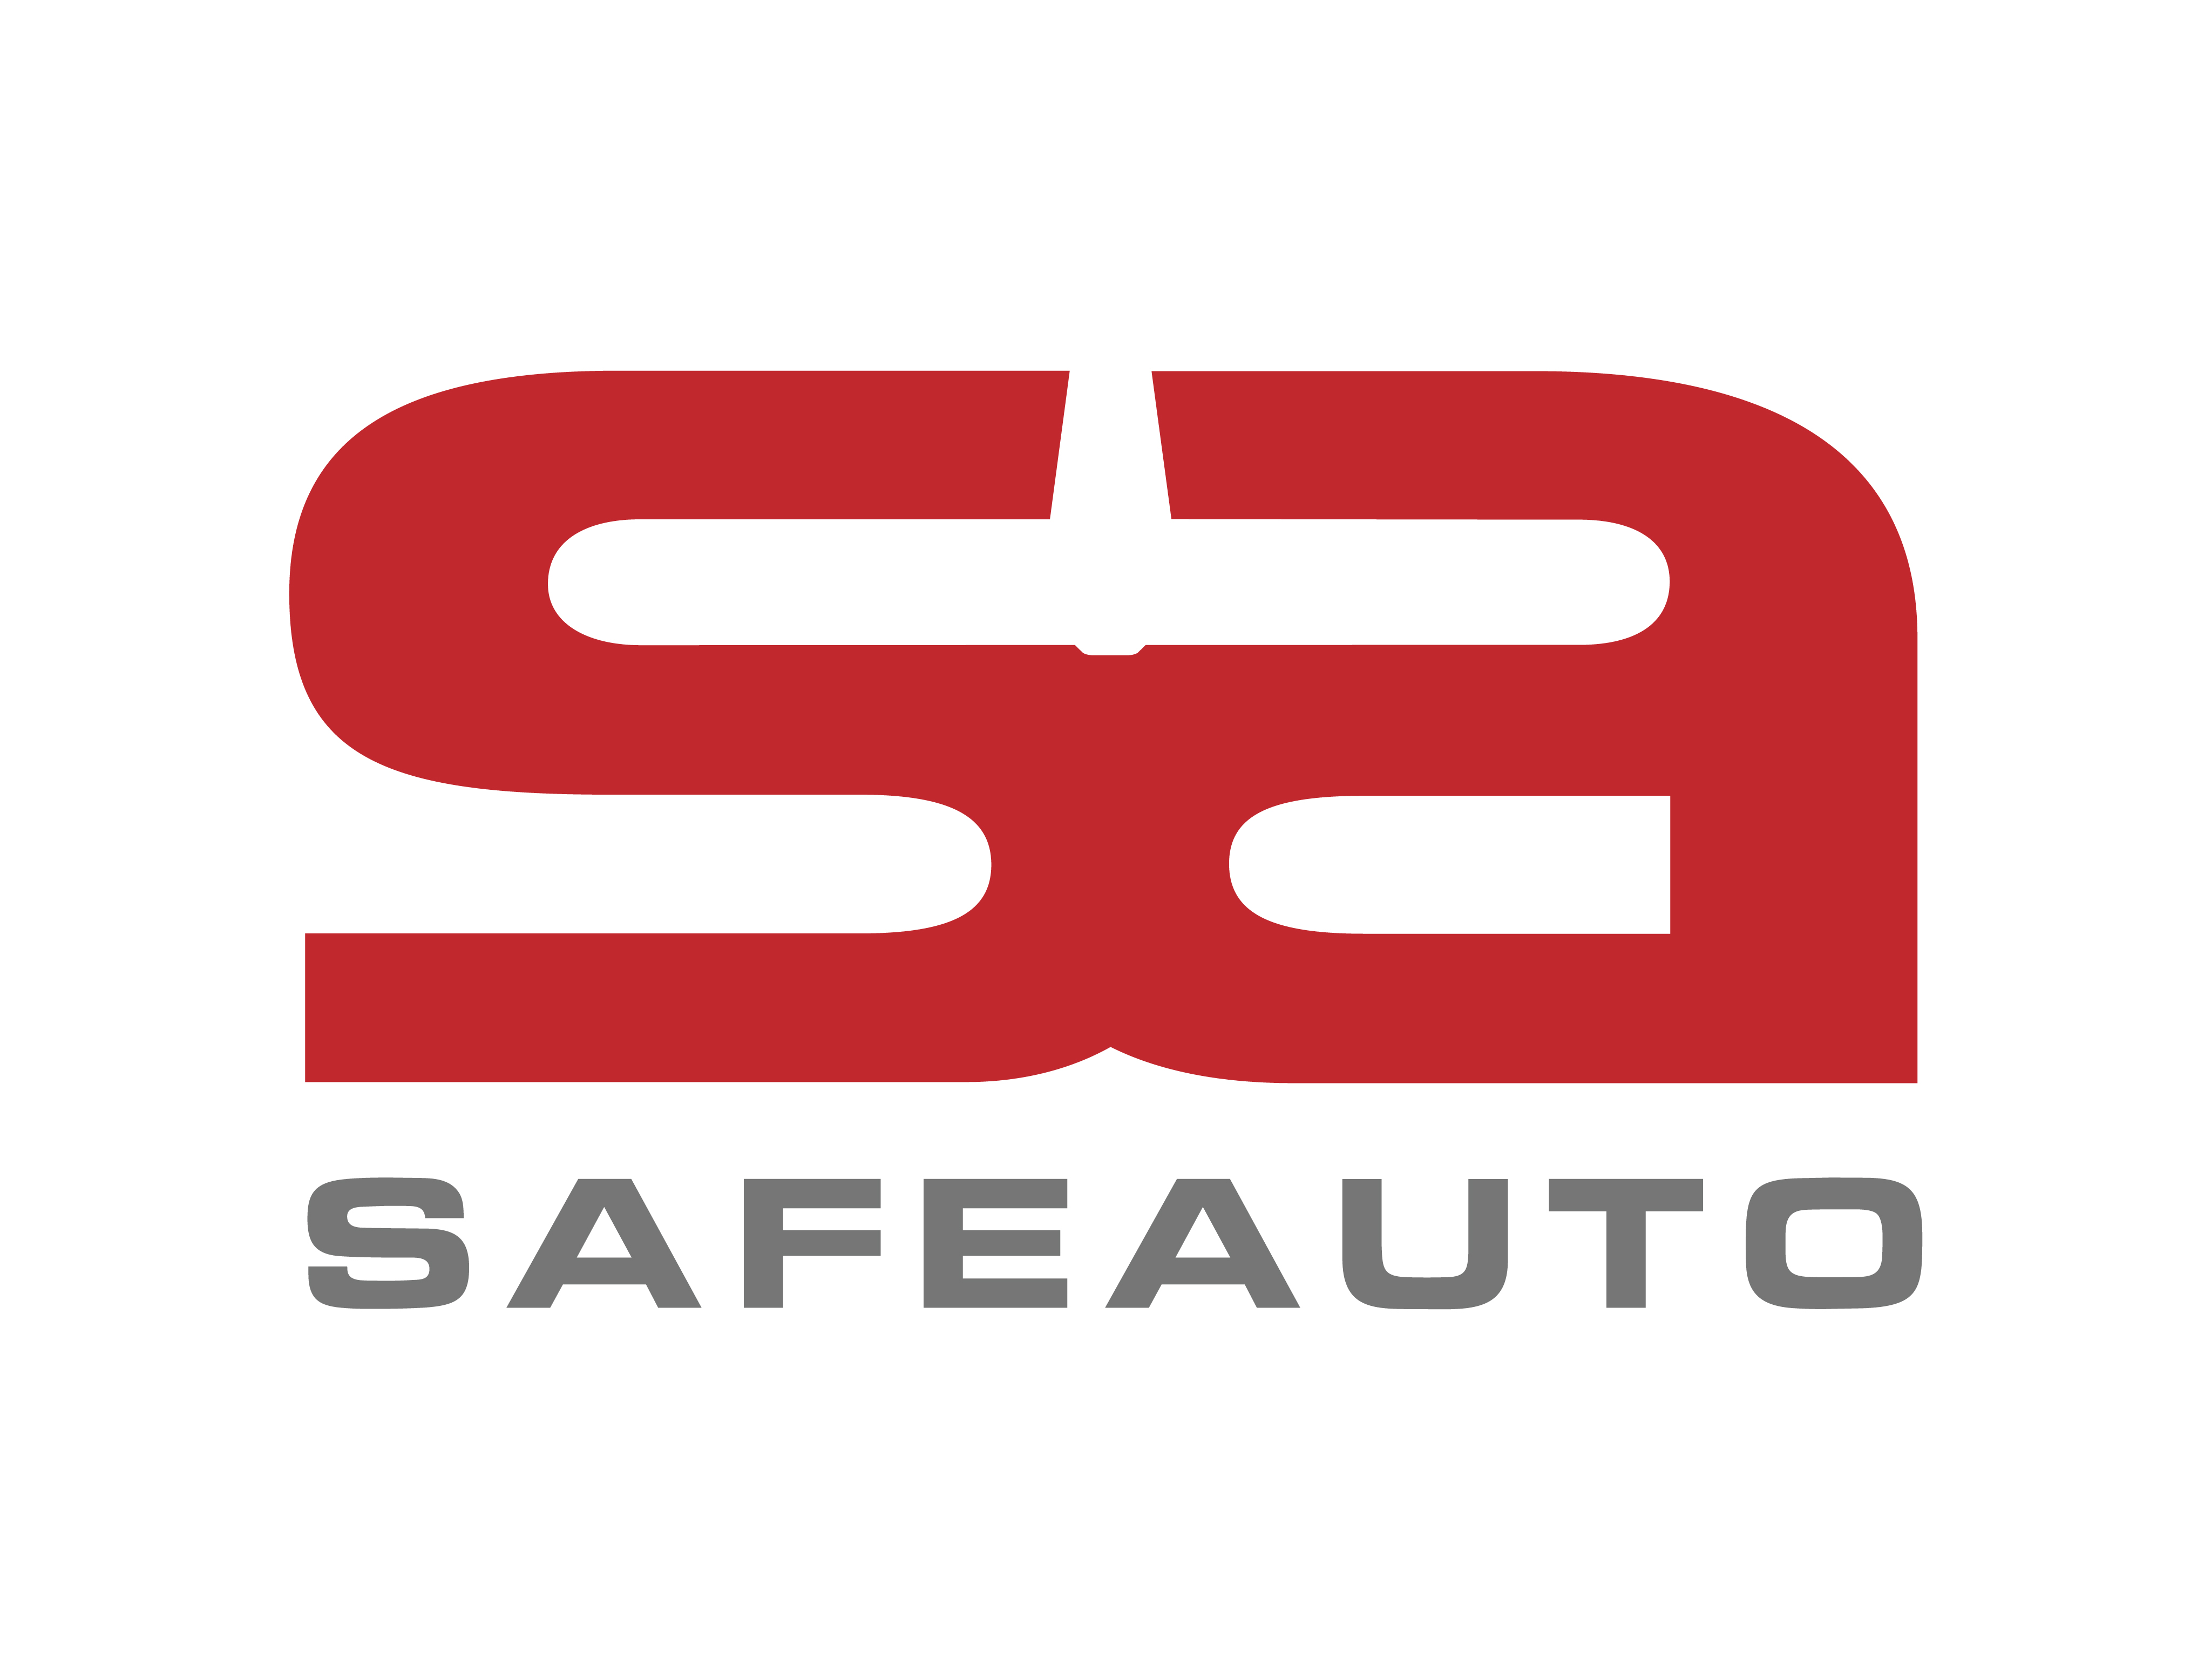 Safe Auto - Logopedia, the logo and branding site